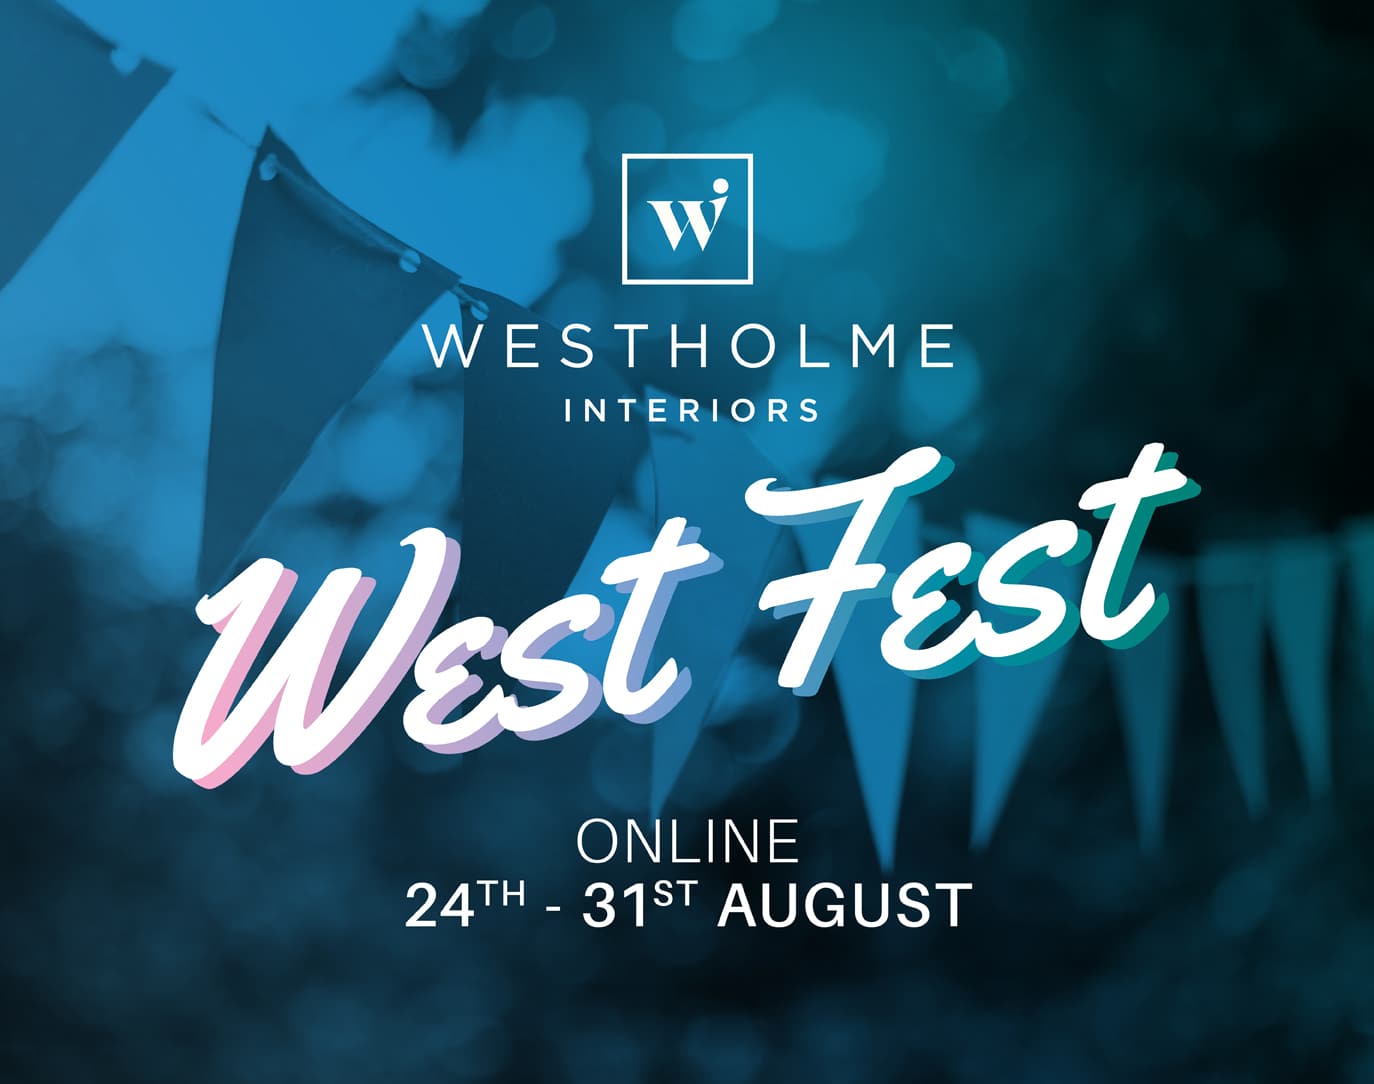 WestFest 2020 Online Event